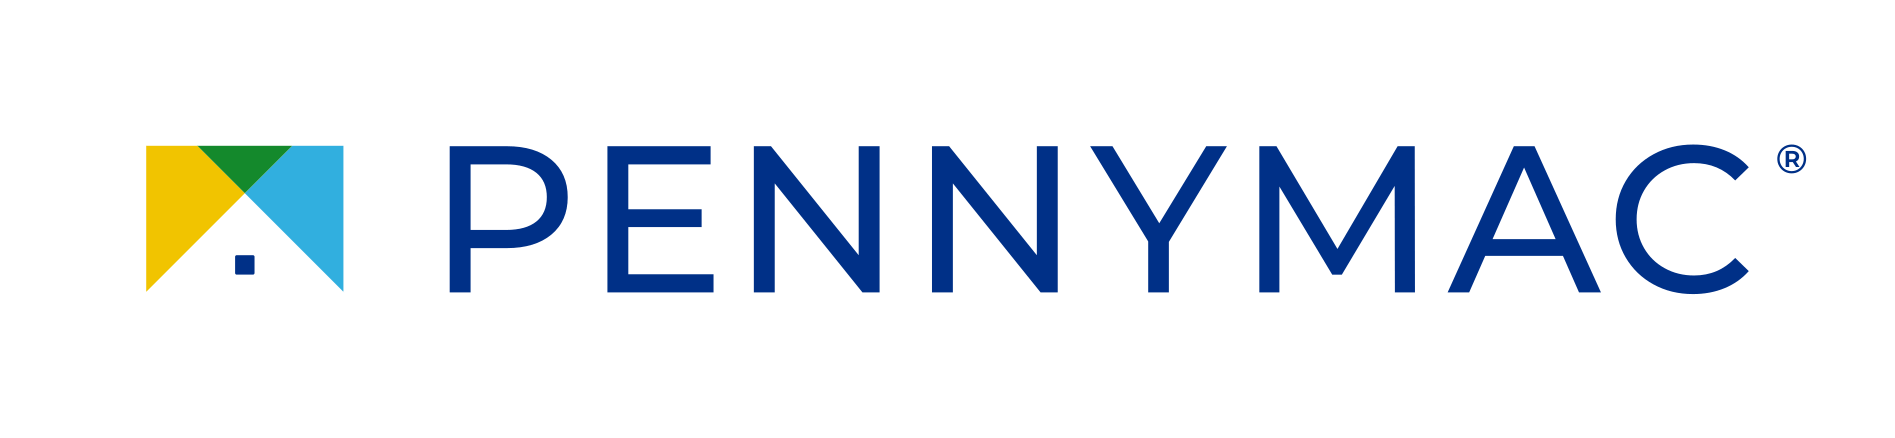 Pennymac - HOME_EQUITY logo